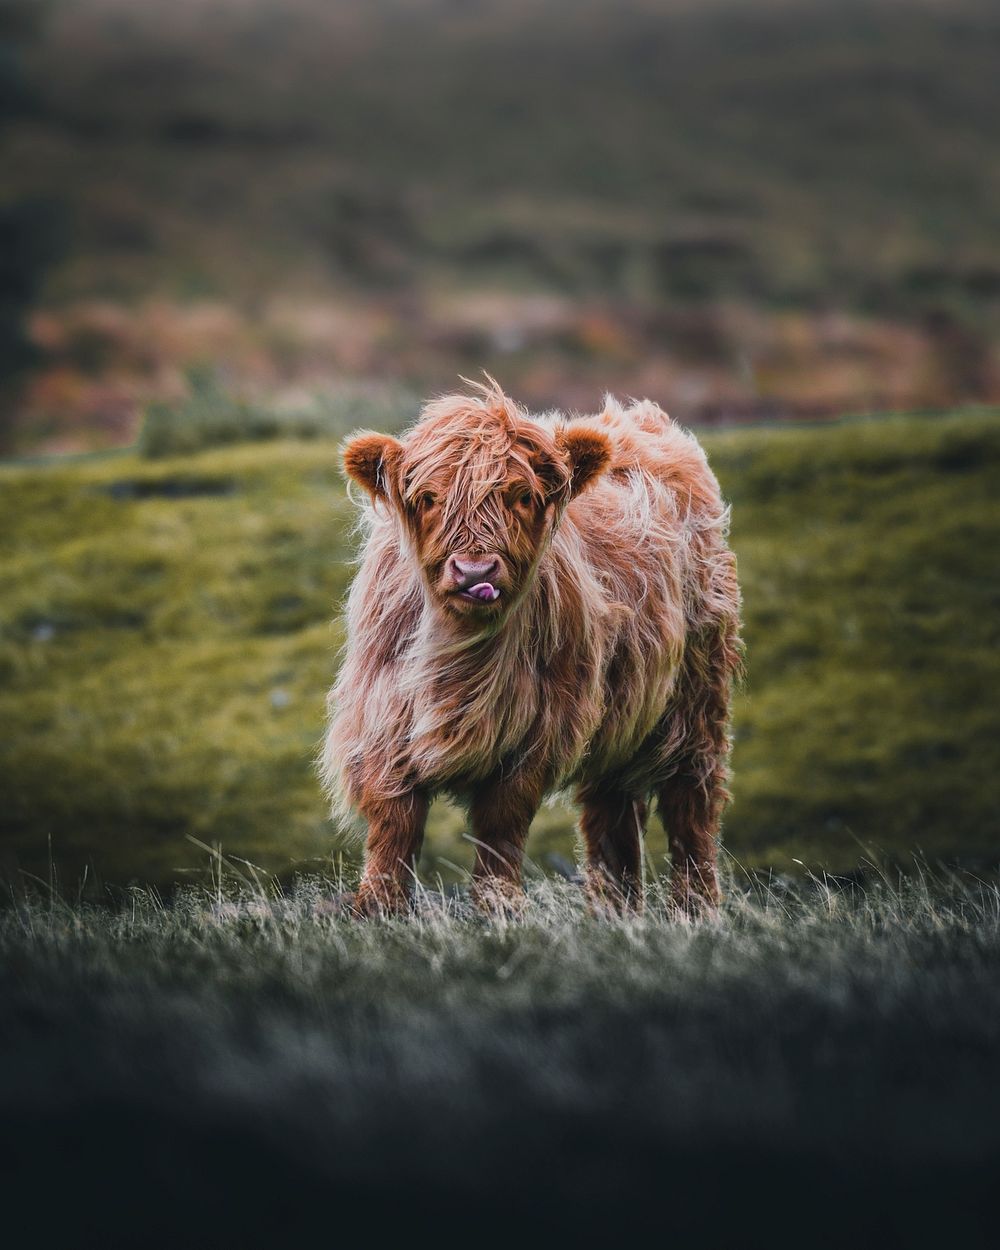 Cute Highland cattle at Scottish Highlands, Scotland